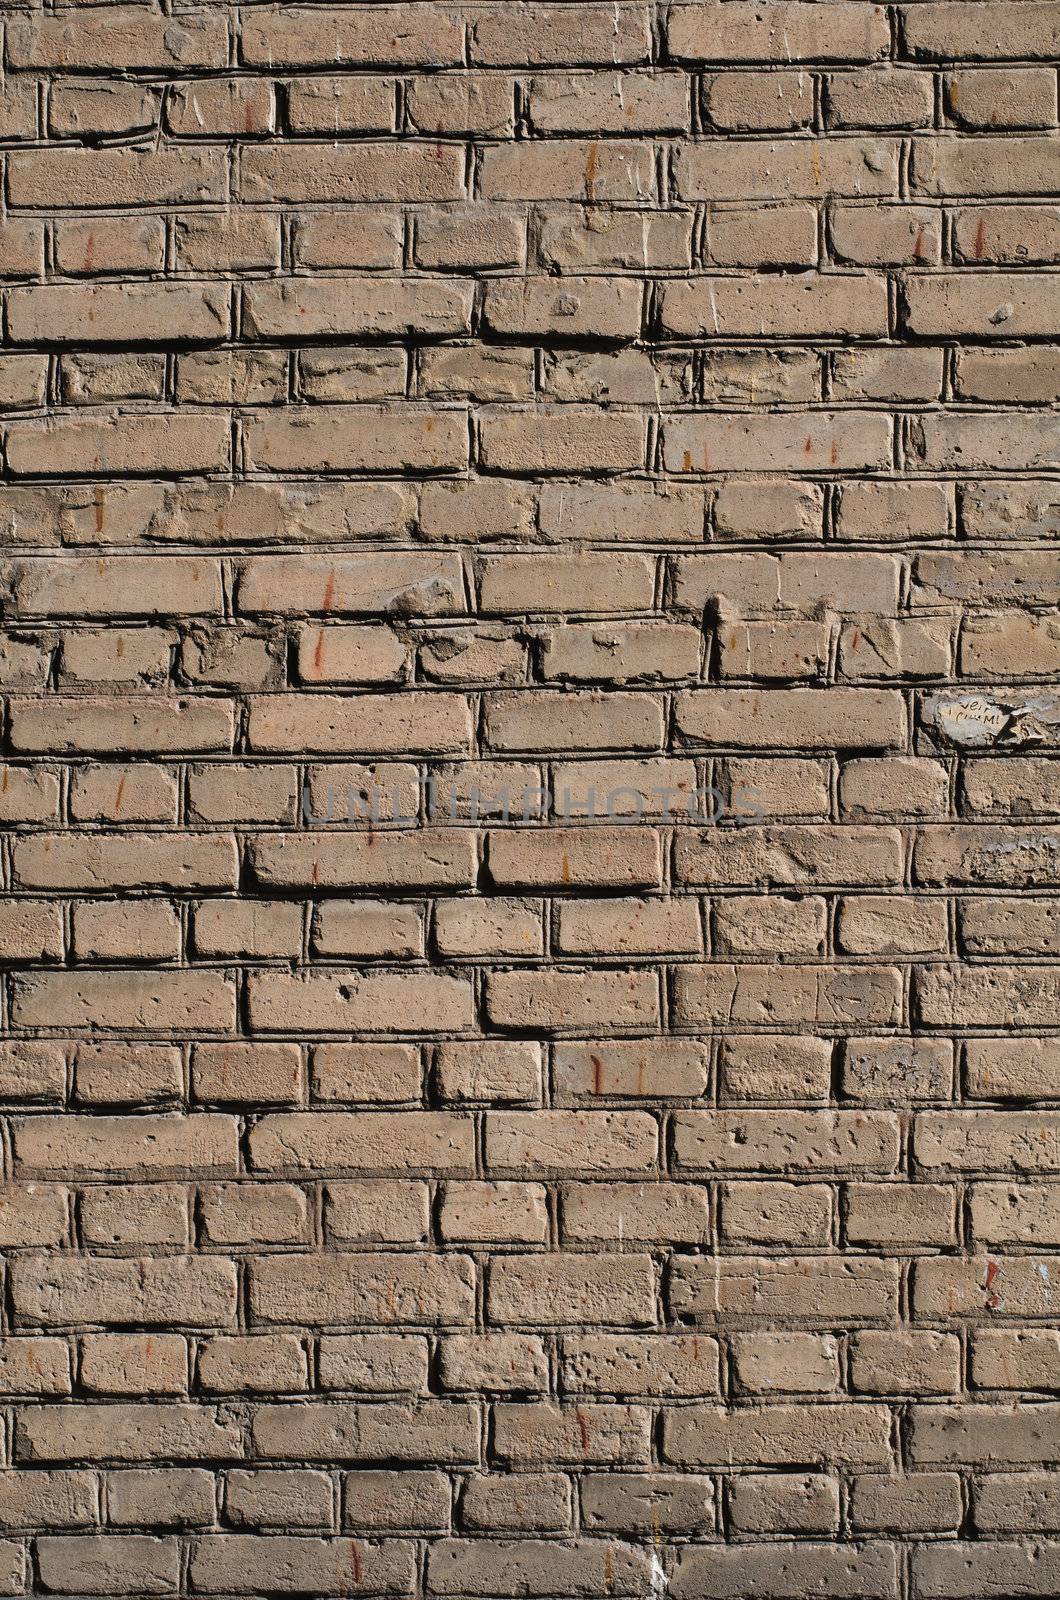 Aged brick wall background by nvelichko